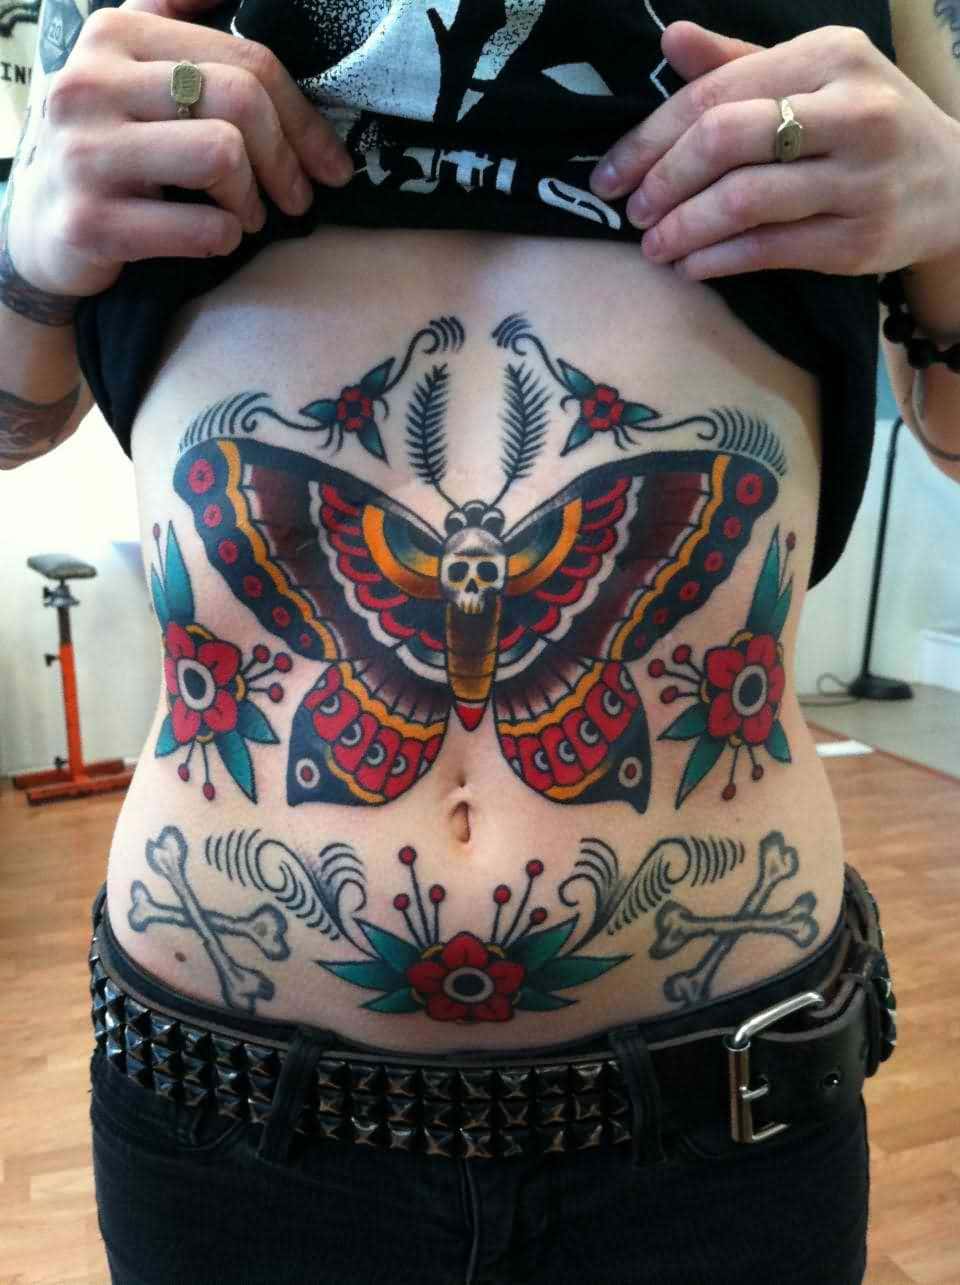 150 Stomach Tattoos That Will Help Make A Bold Style Statement - Wild Tattoo  Art